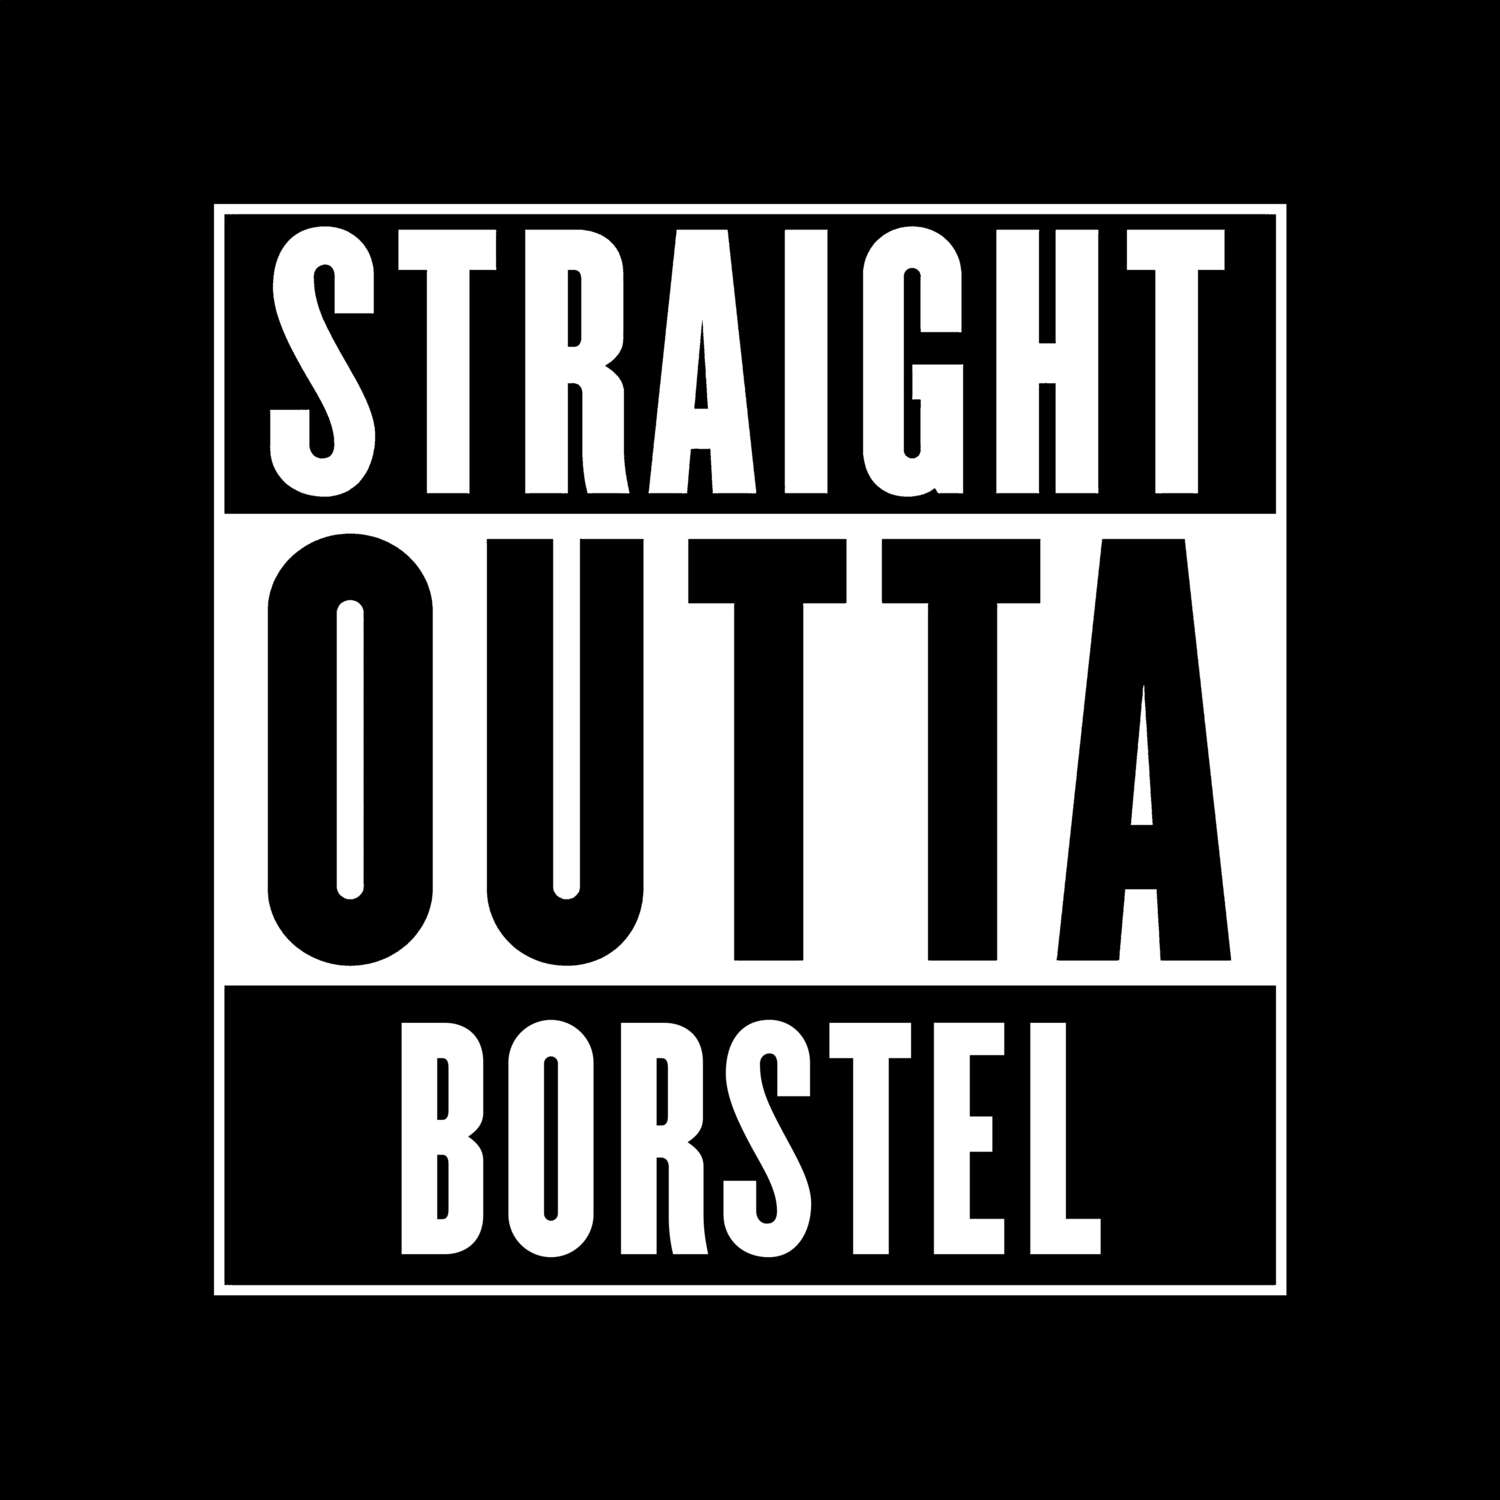 Borstel T-Shirt »Straight Outta«